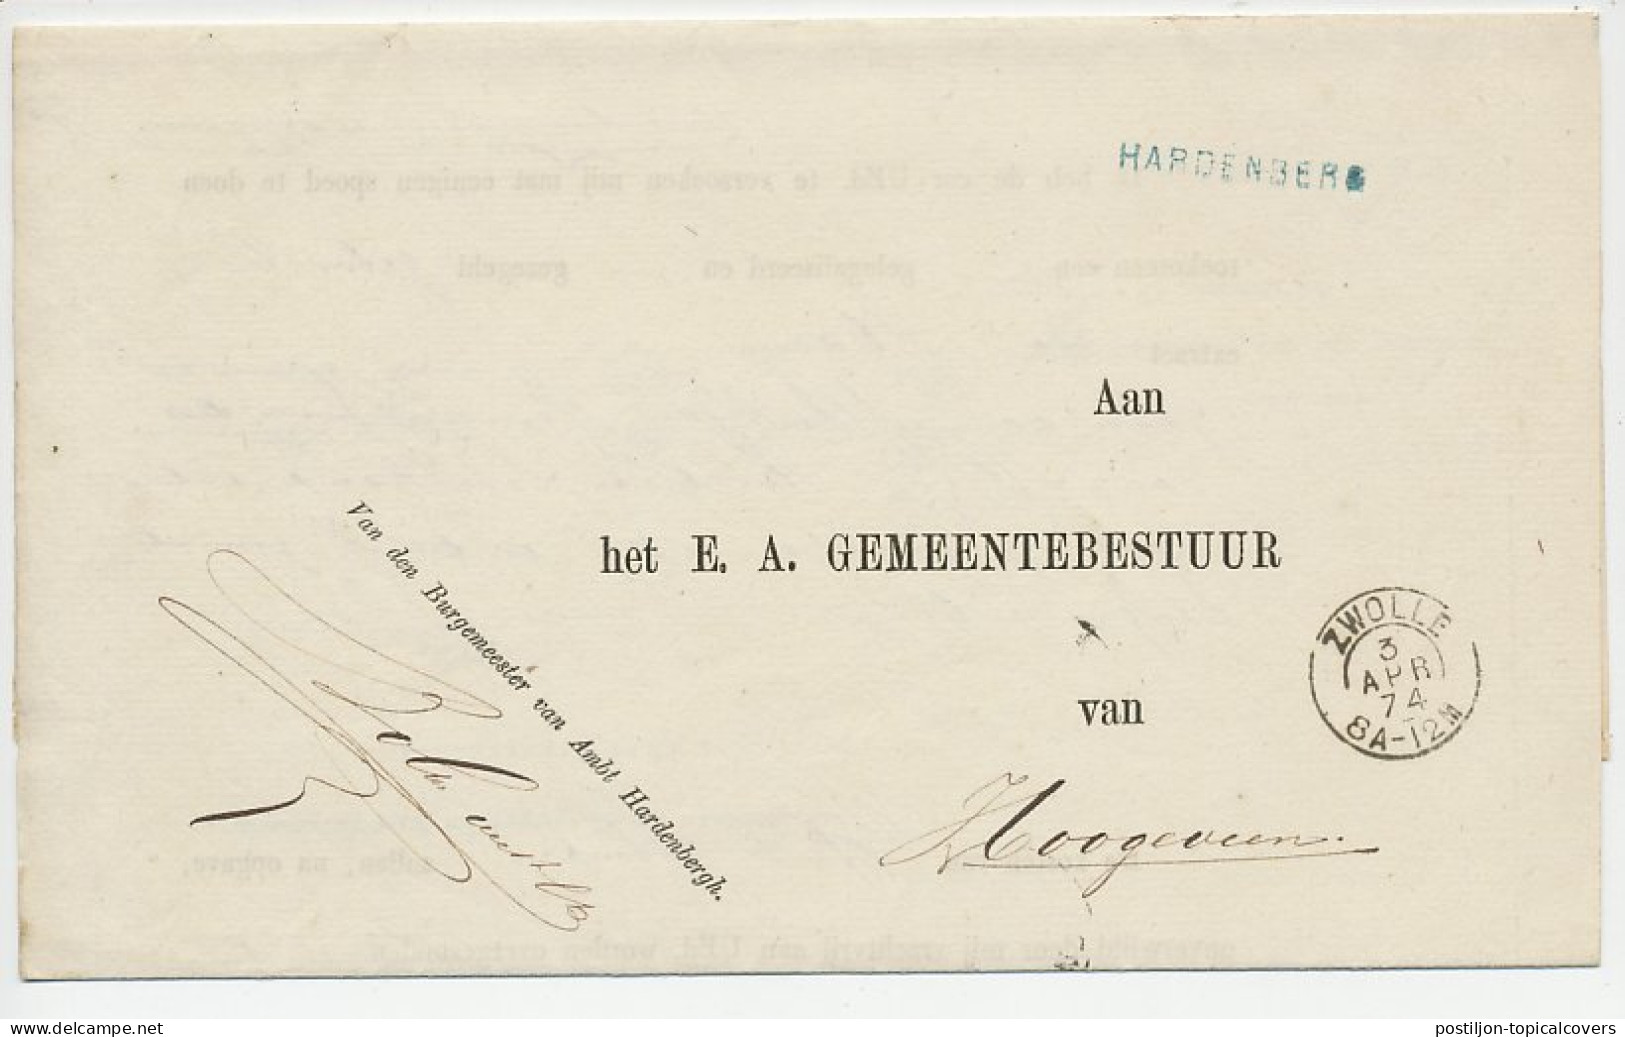 Naamstempel Hardenberg 1874 - Briefe U. Dokumente